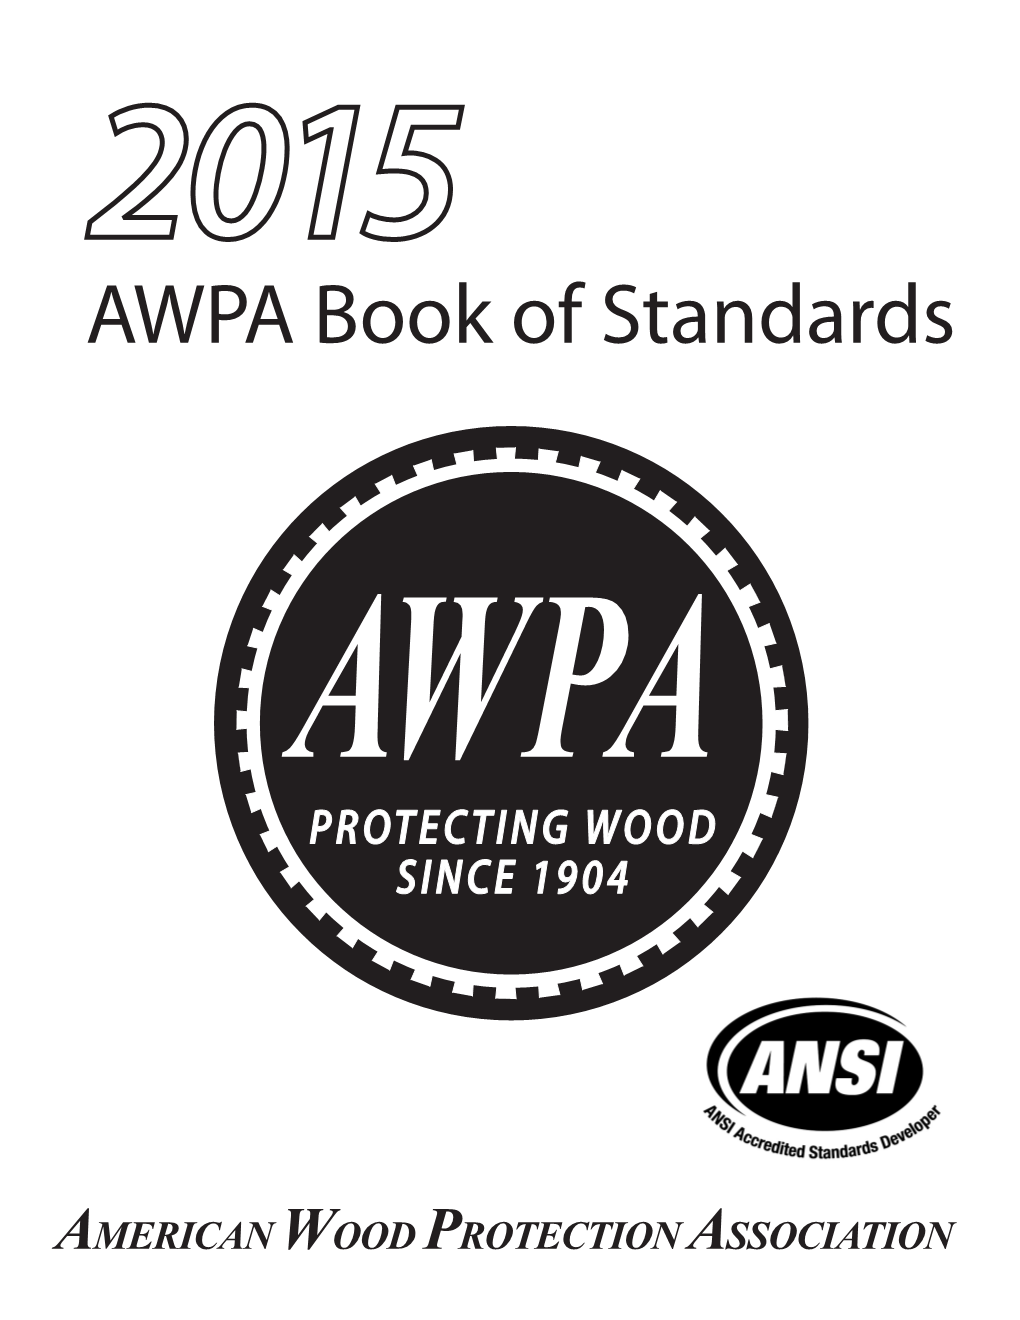 AWPA Book of Standards AWPA PROTECTING WOOD SINCE 1904